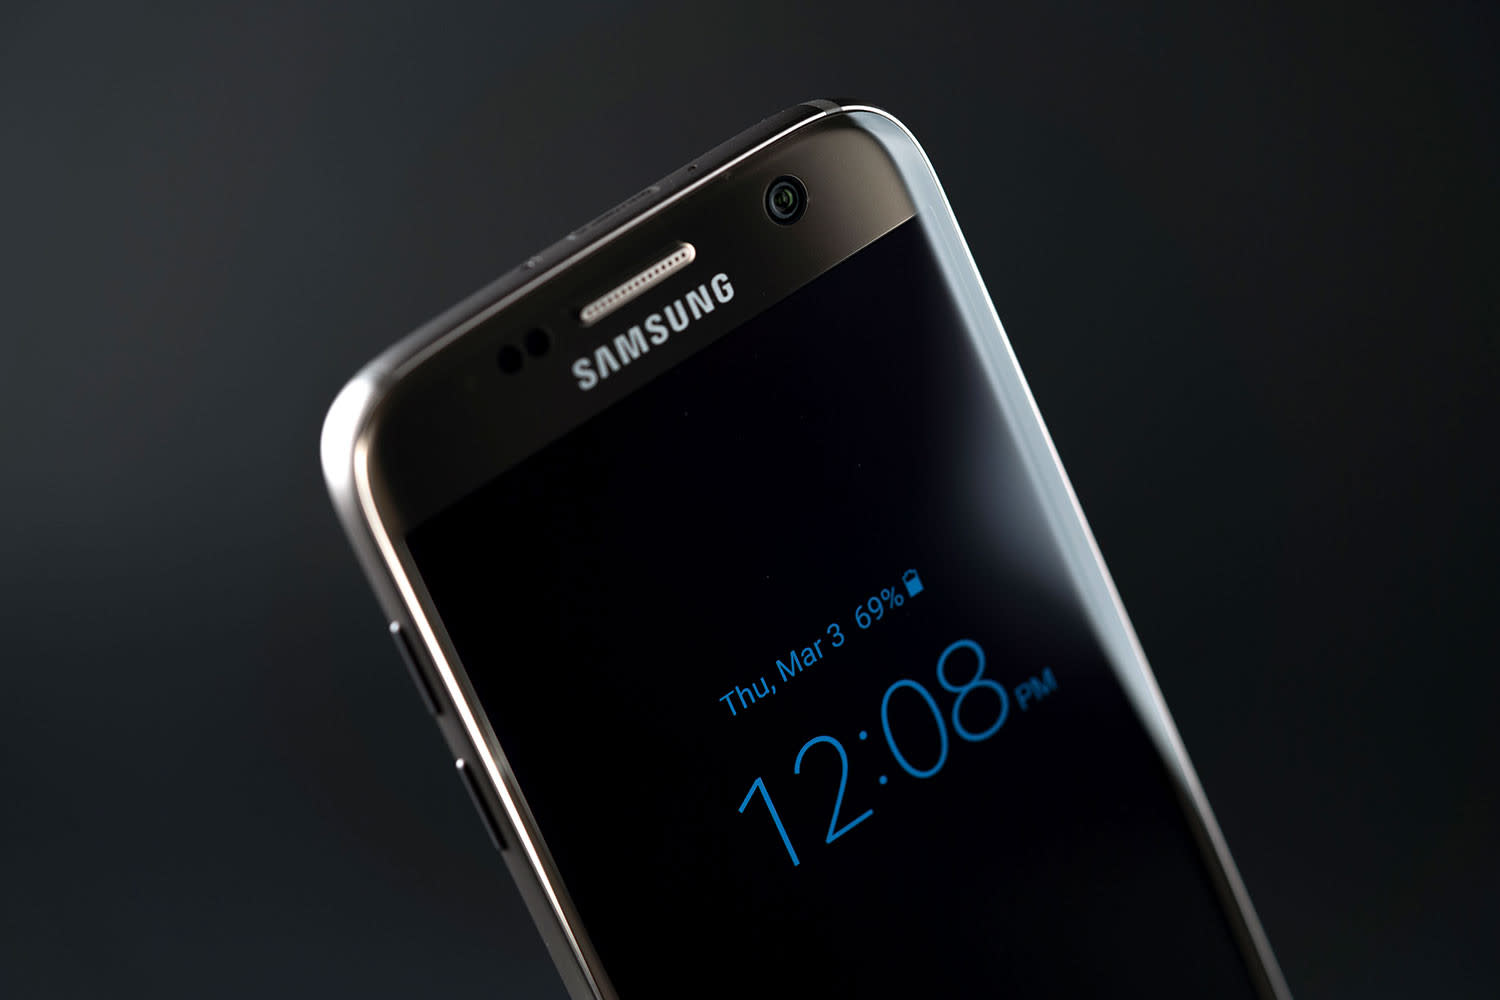 Samsung Galaxy S8 rumors and news leaks